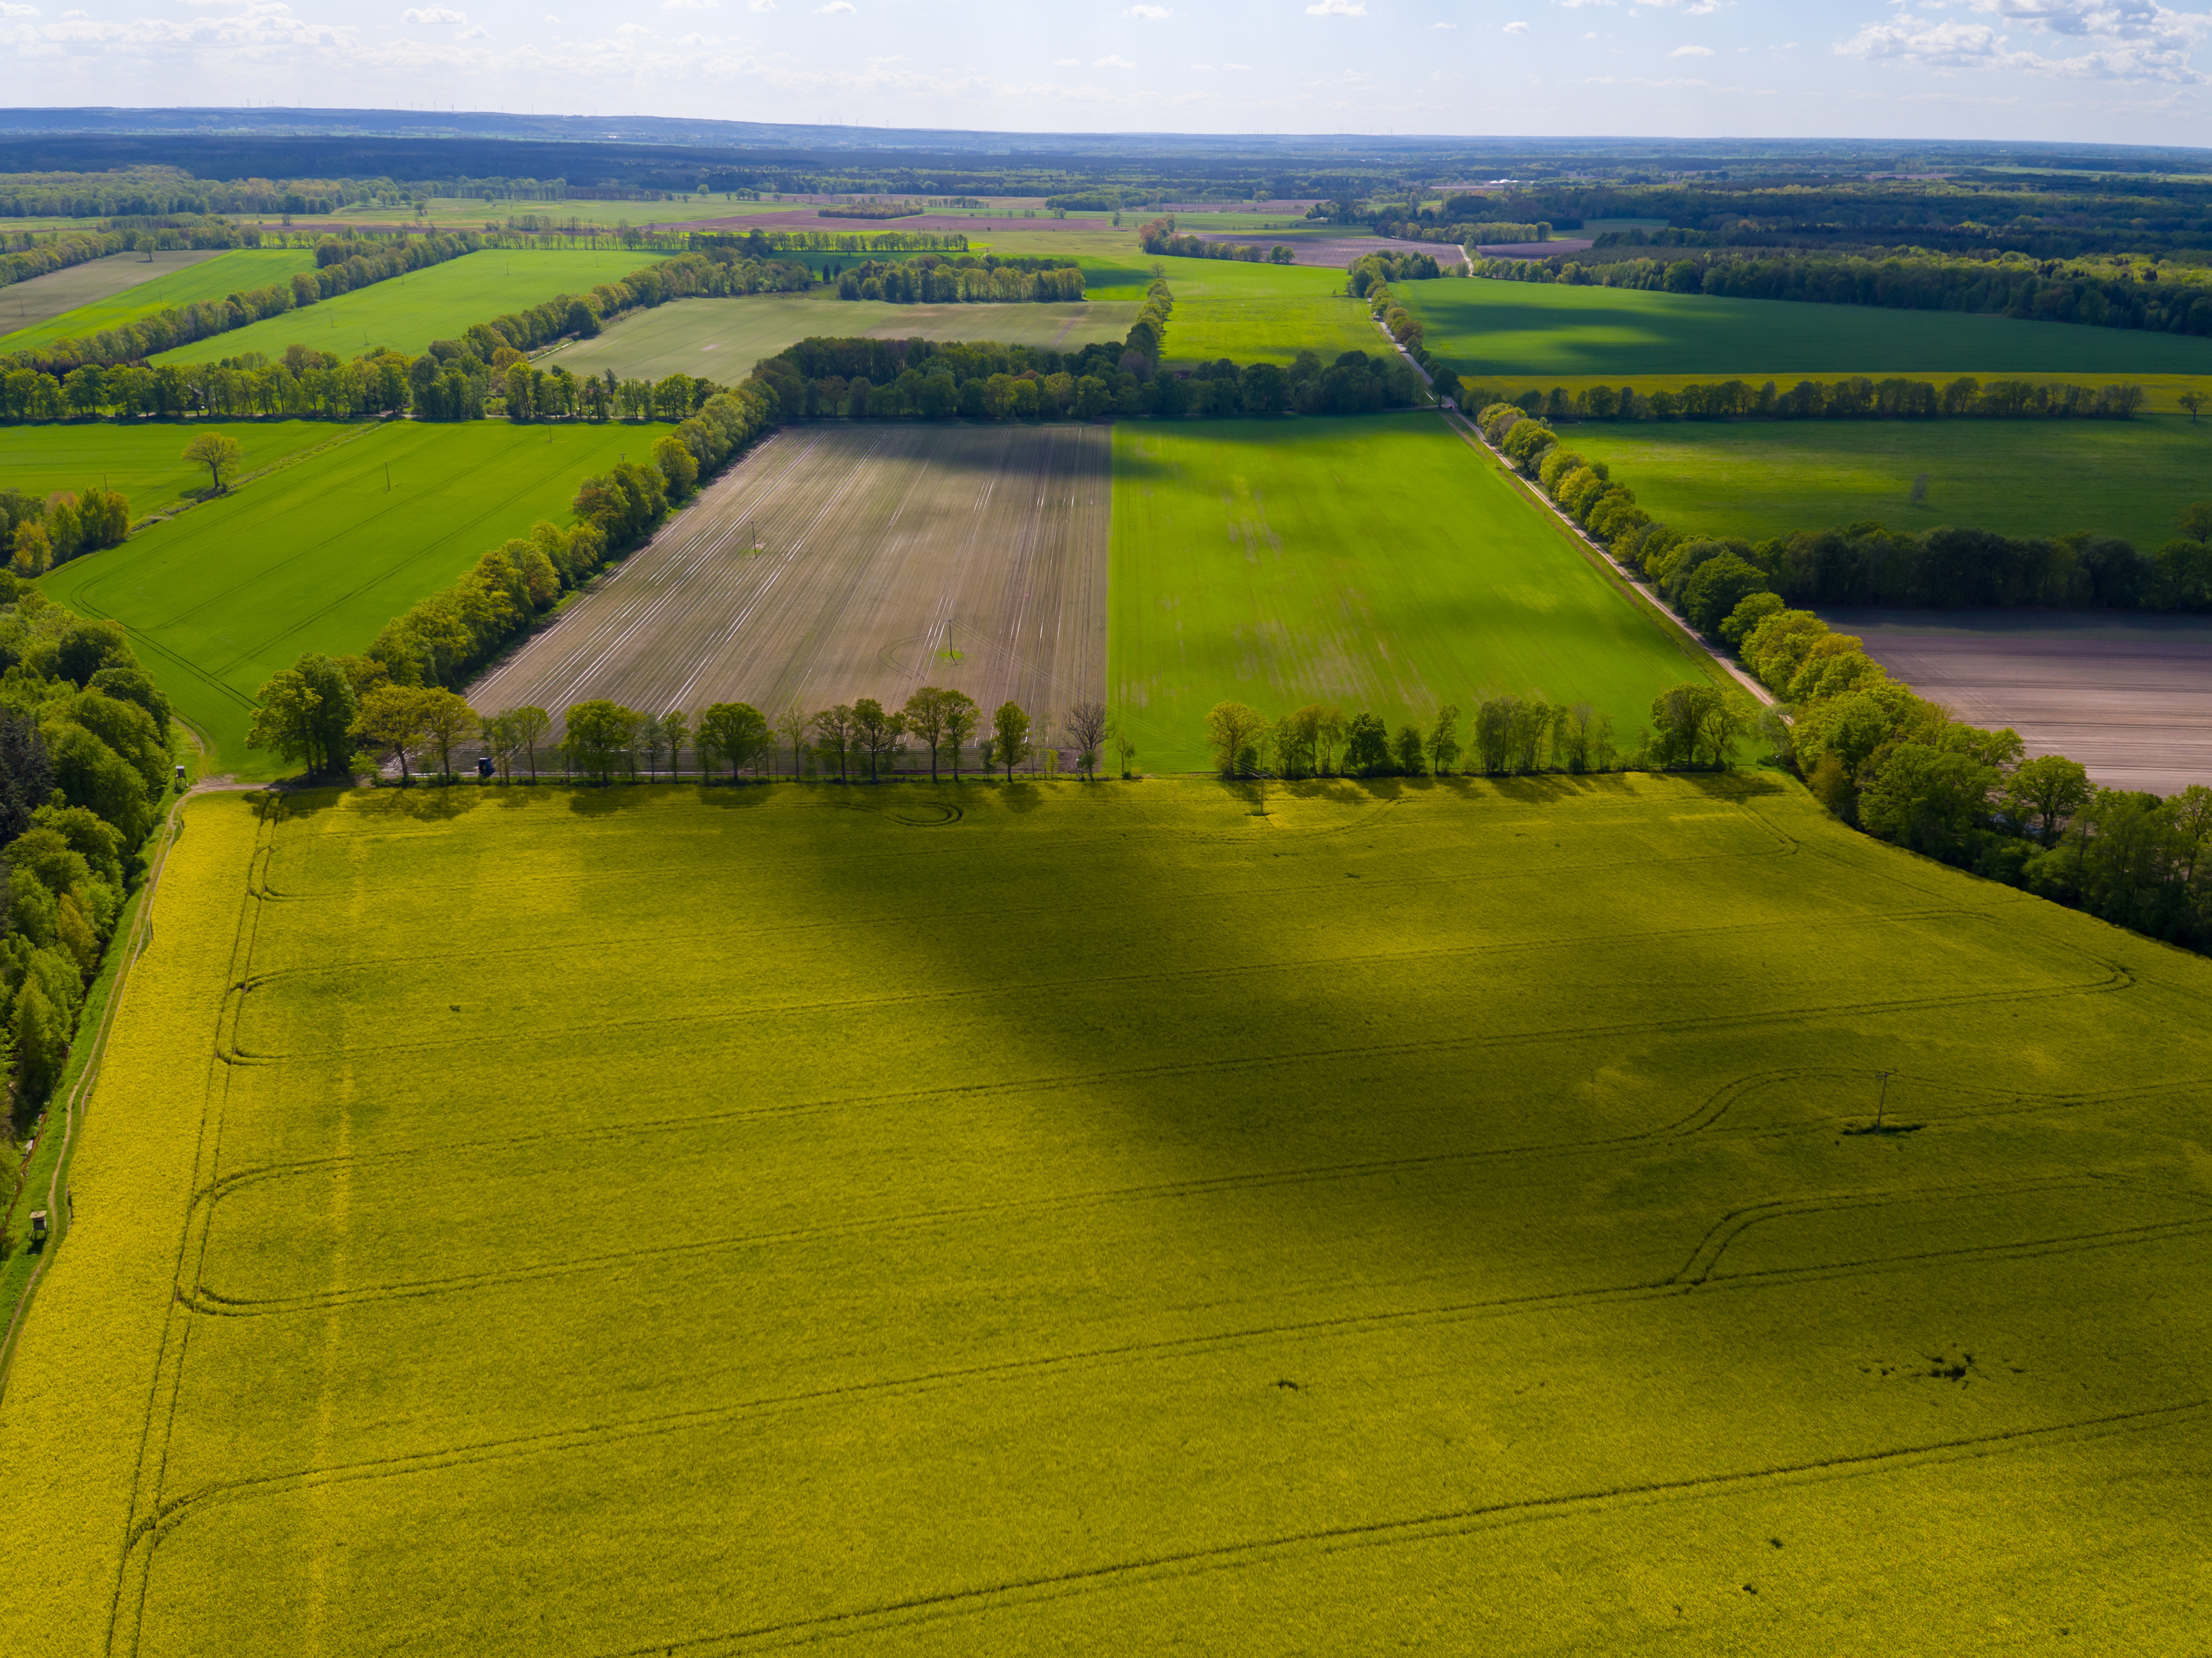 Felder aus der Luft fotografiert.